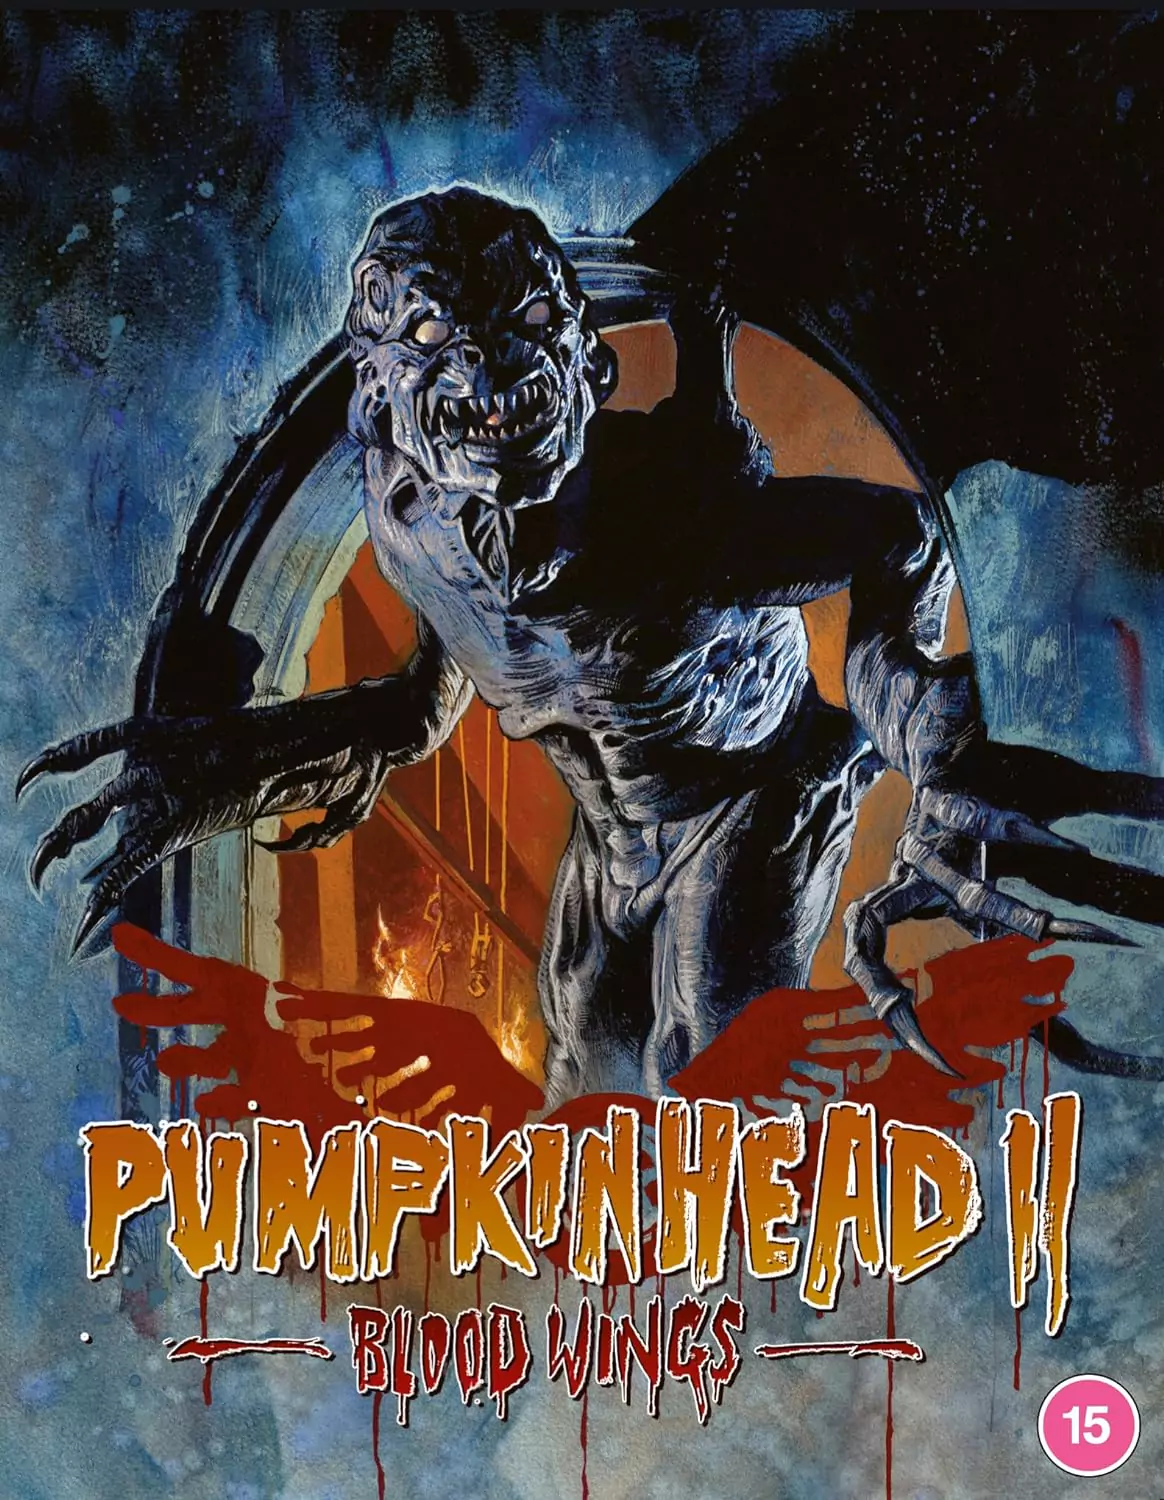 Pumpkinhead II Blood Wings Blu-Ray cover artwork